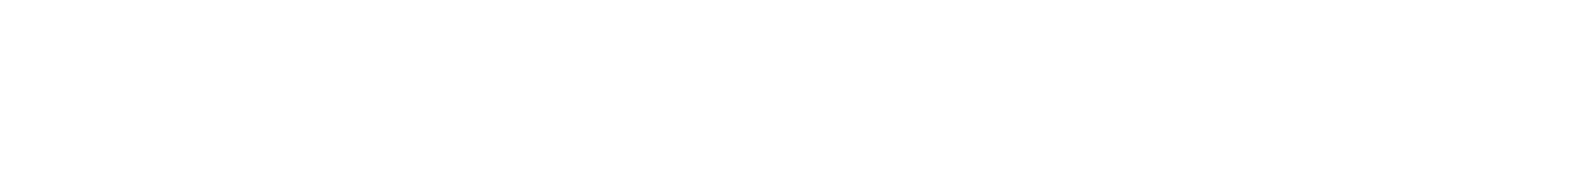 Yamana Gold
 logo large for dark backgrounds (transparent PNG)